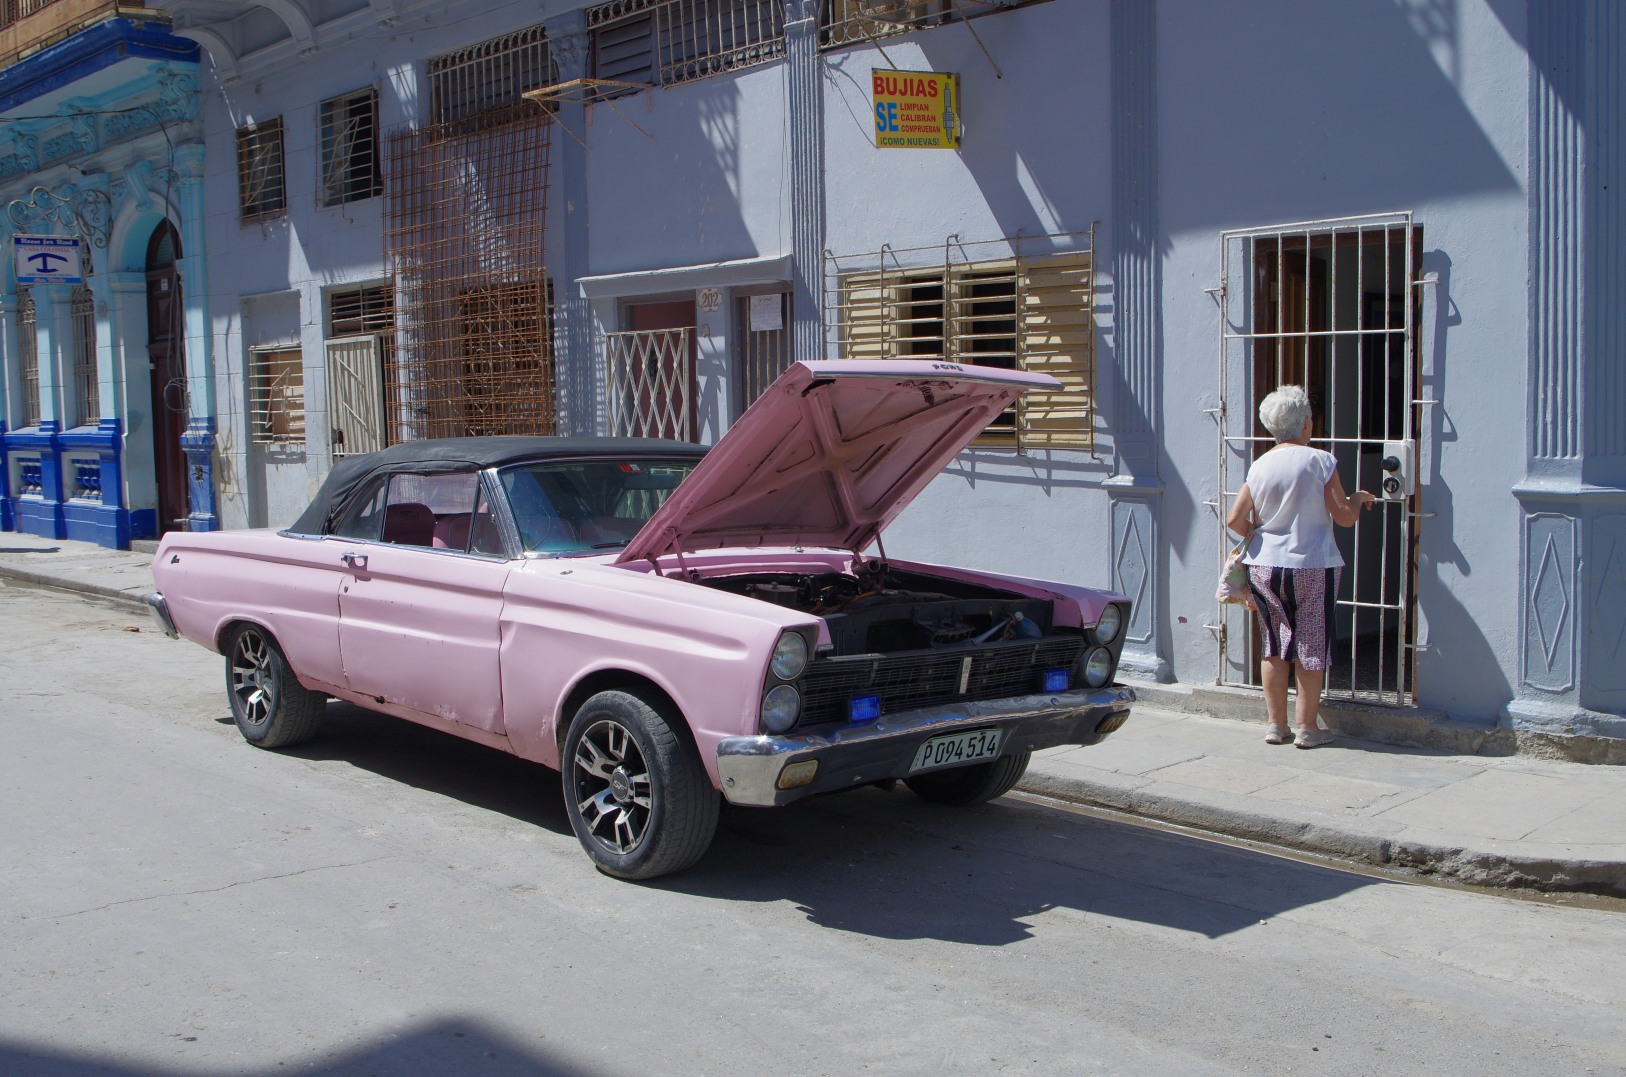 Havana Centro utcái IV